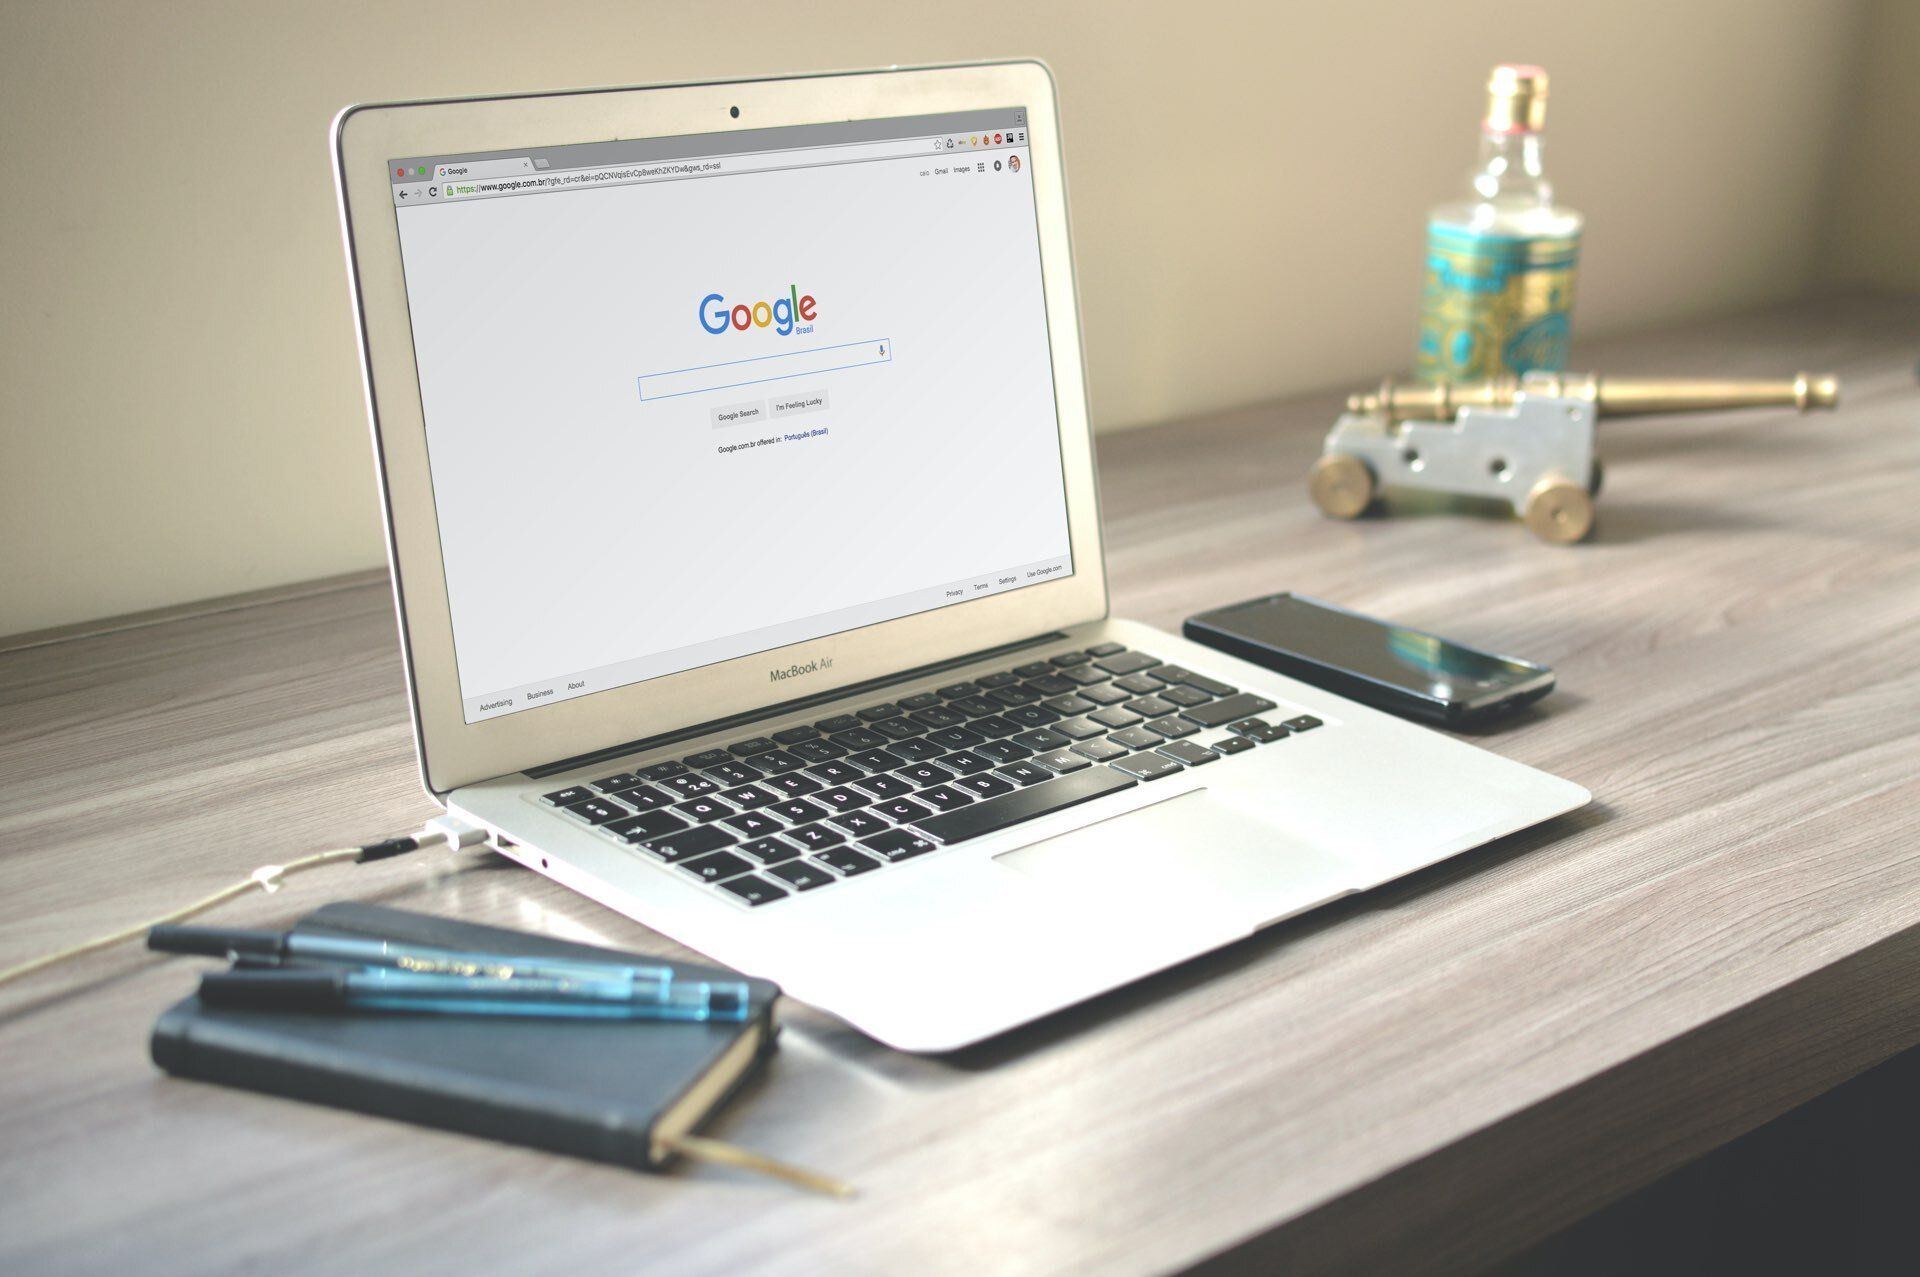 Search engine google on laptop